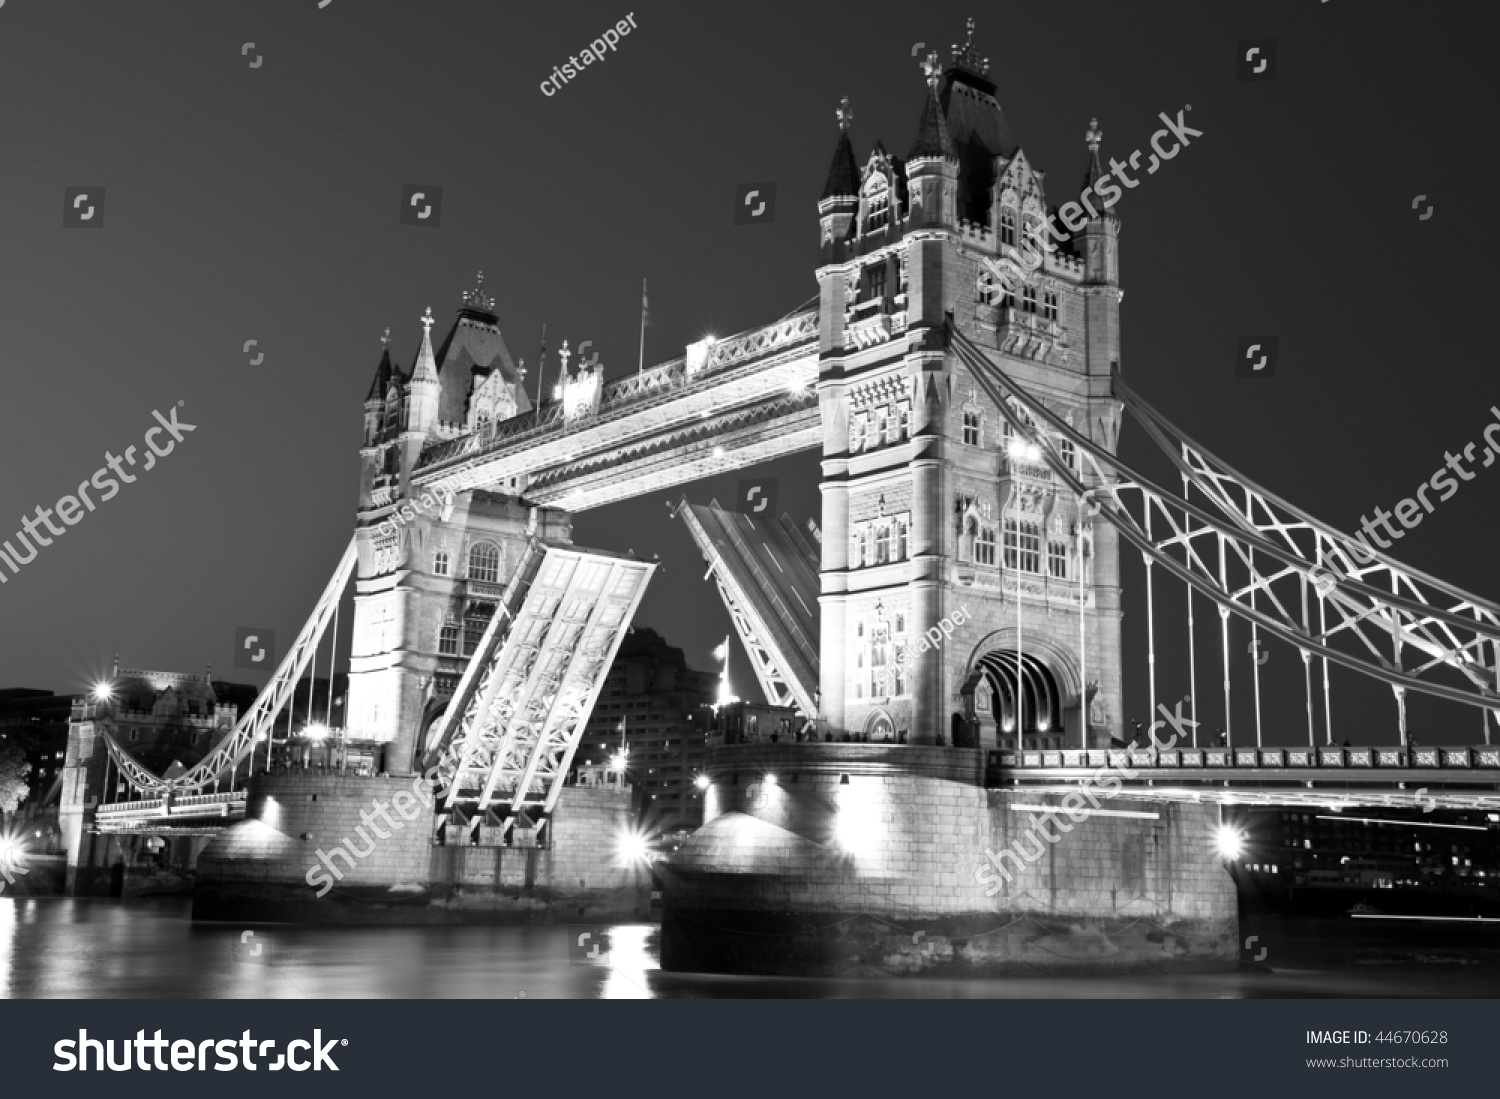 26,559 Tower bridge black and white Images, Stock Photos & Vectors ...